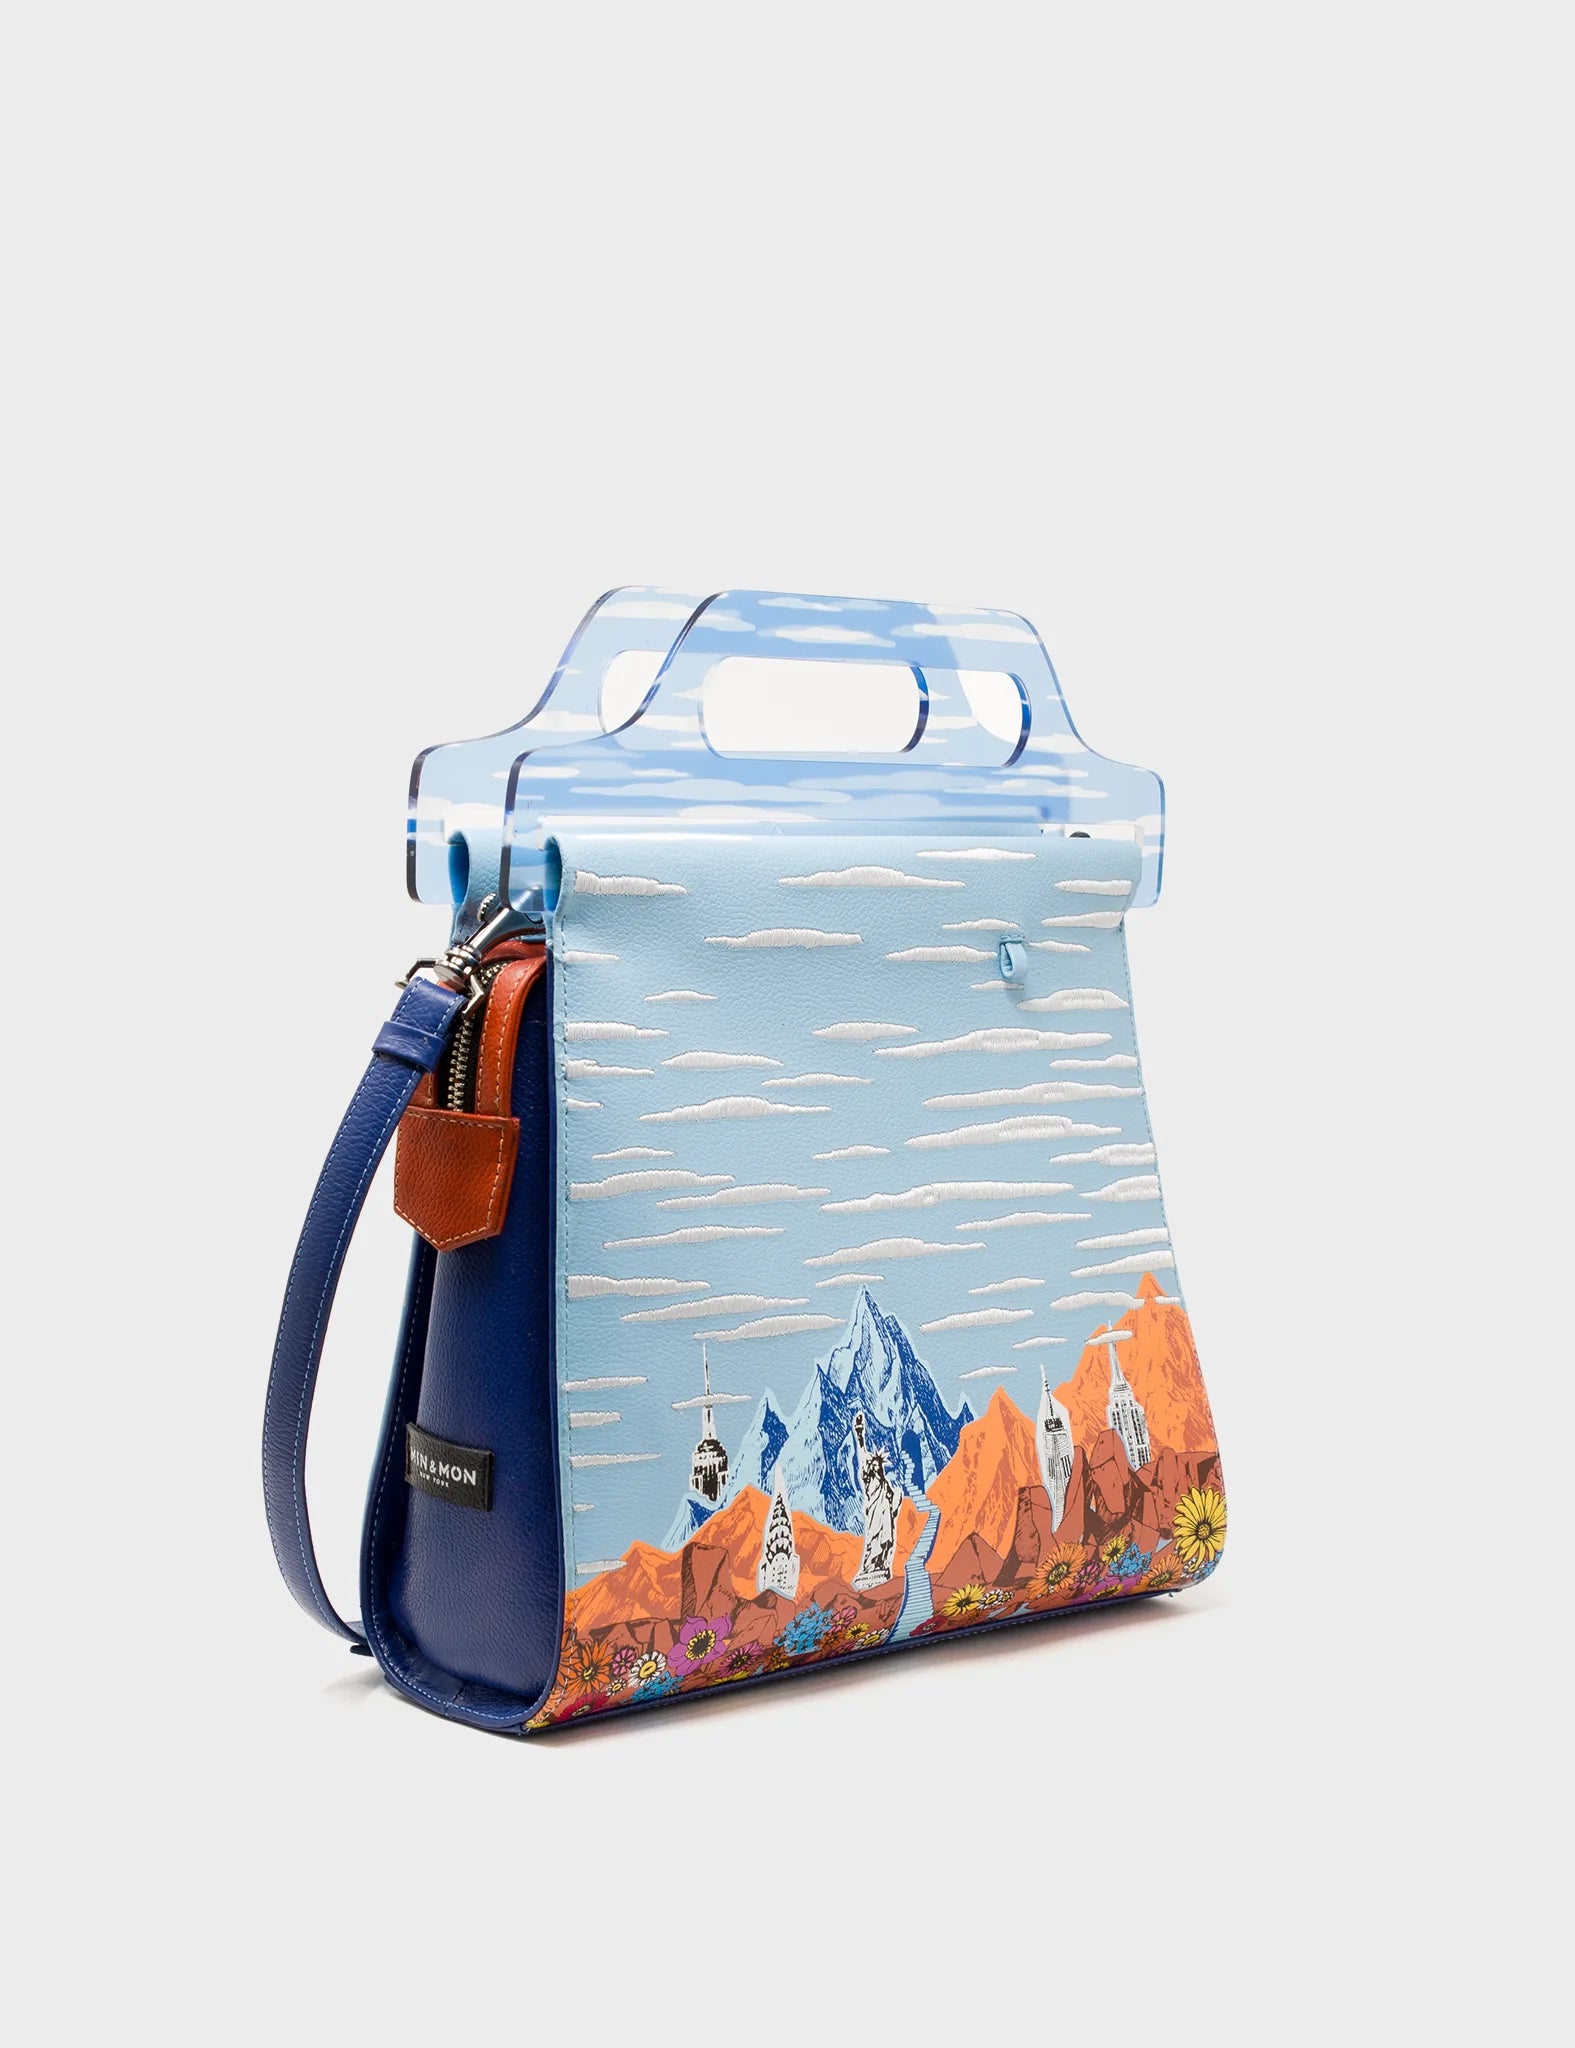 Blue Crossbody Handbag - Mountains, Flowers and Clouds Design